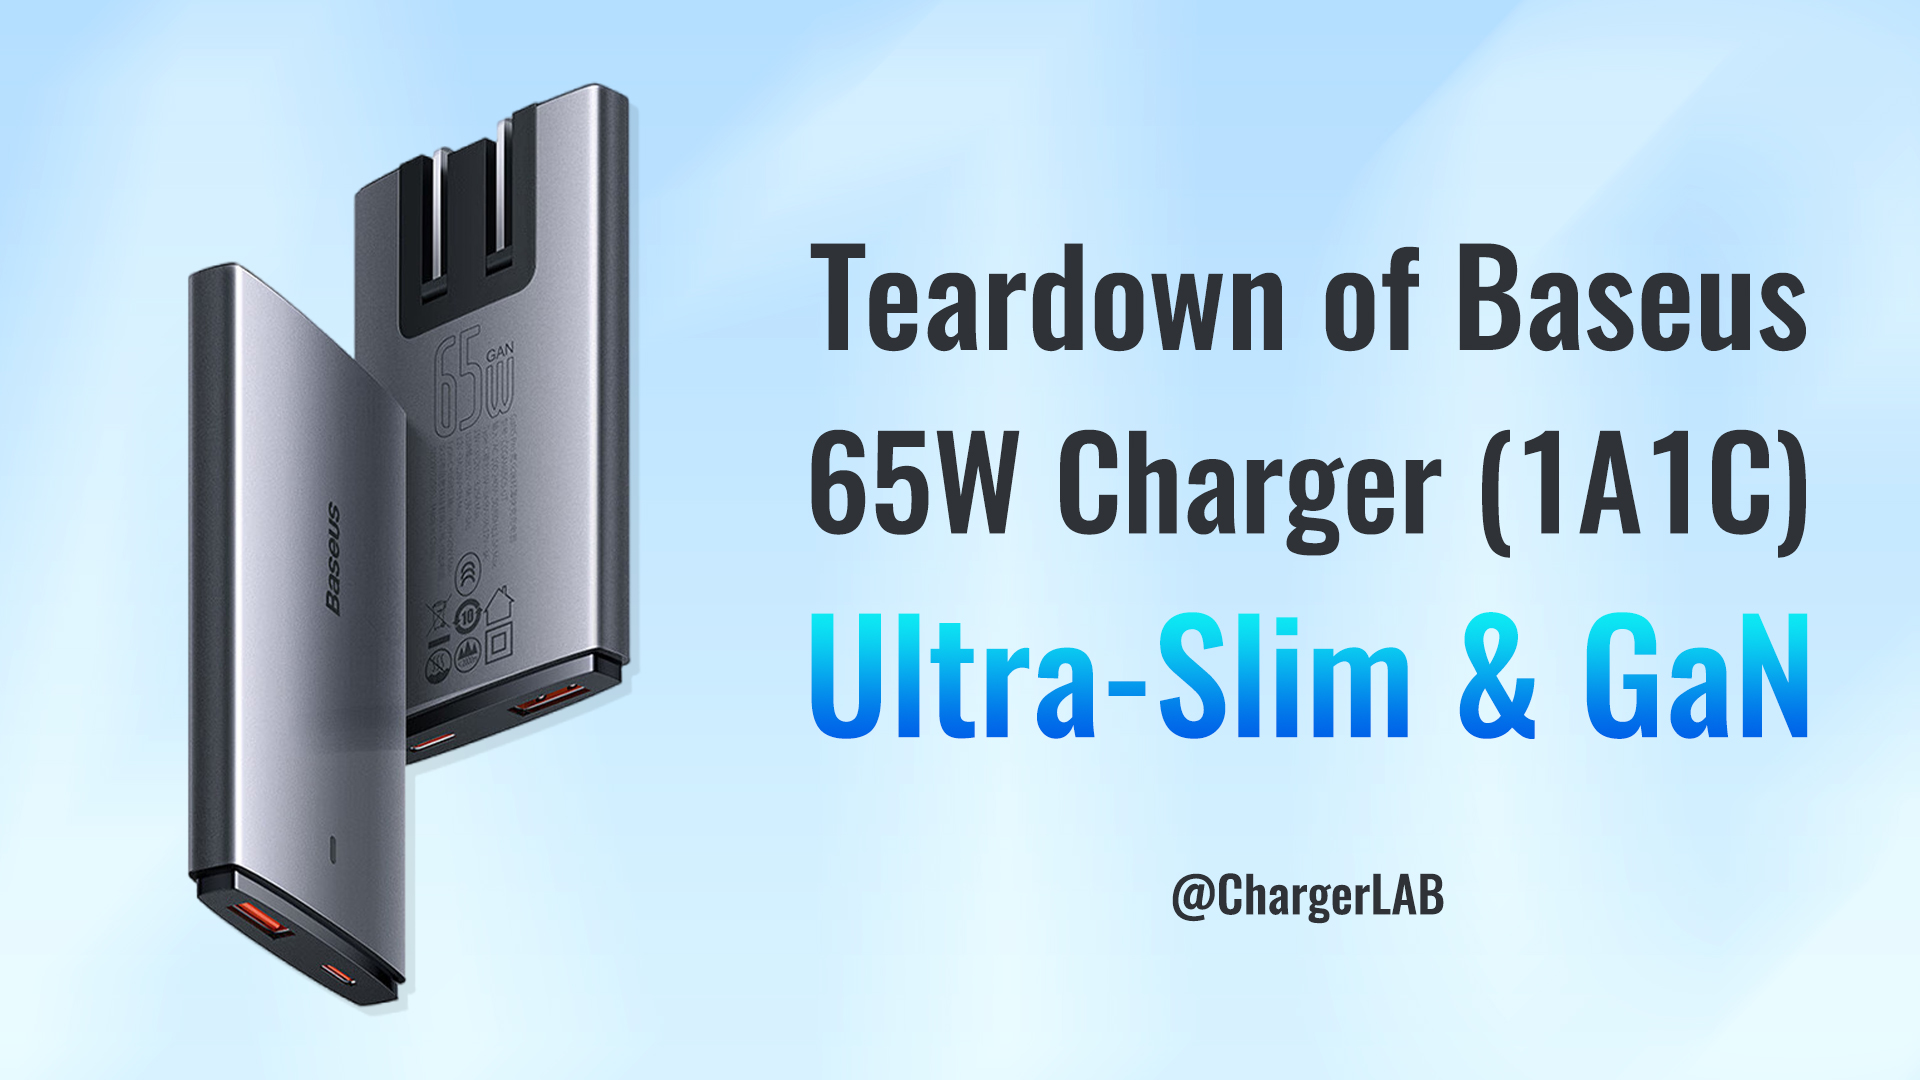 Ultra-Slim & GaN  Teardown of Baseus 65W Charger (1A1C) - Chargerlab